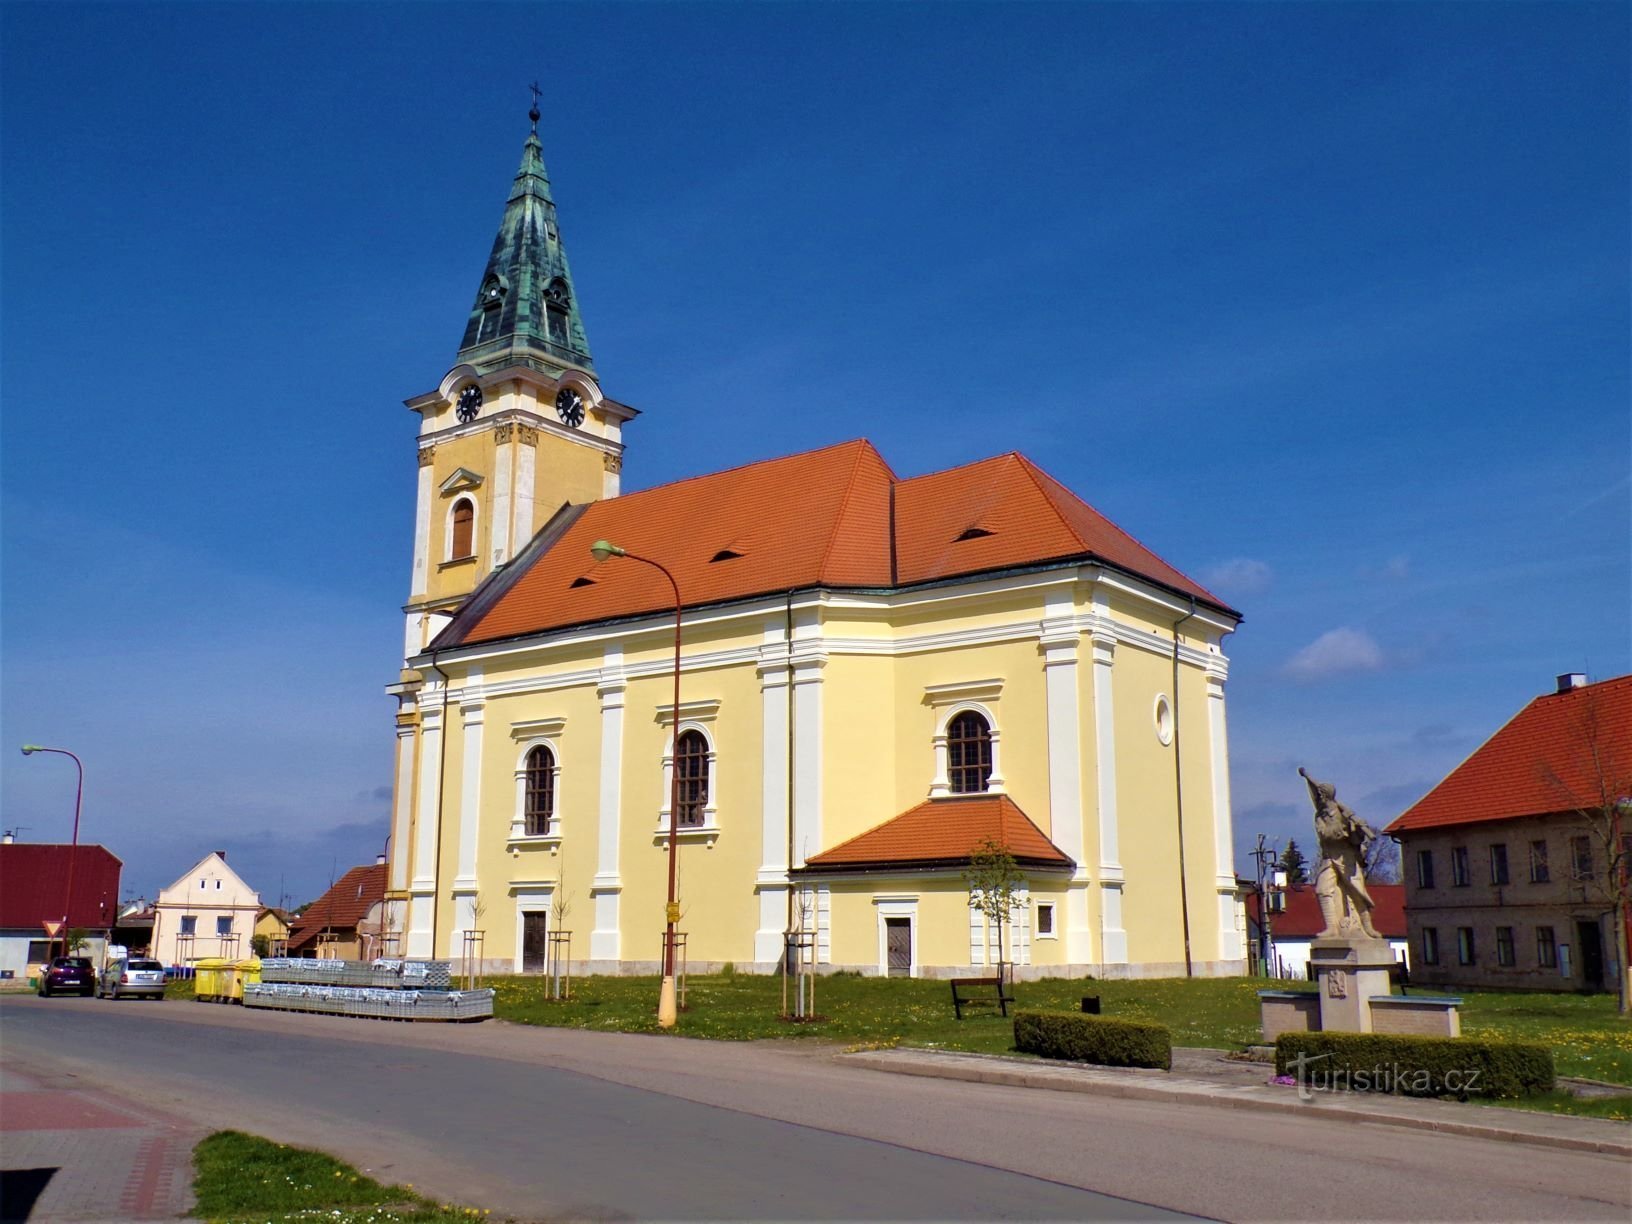 Iglesia de San Stanislav con el monumento caído (Smidary, 30.4.2021/XNUMX/XNUMX)